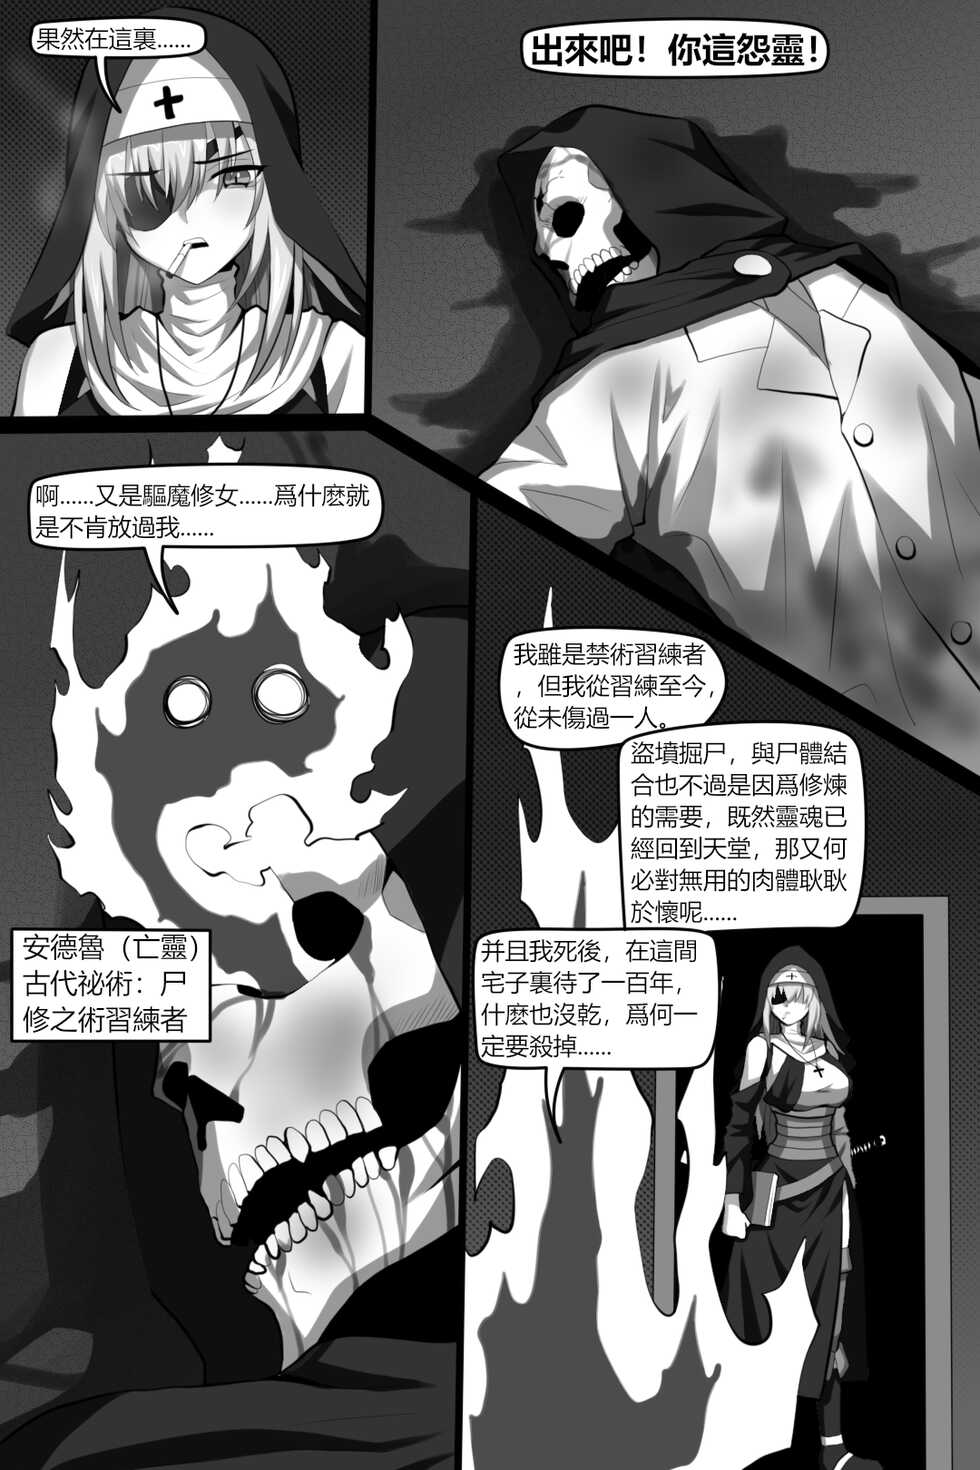 [Wushui]  Bin Lian City Stories Ch2: Exorcist Nun. - Page 6